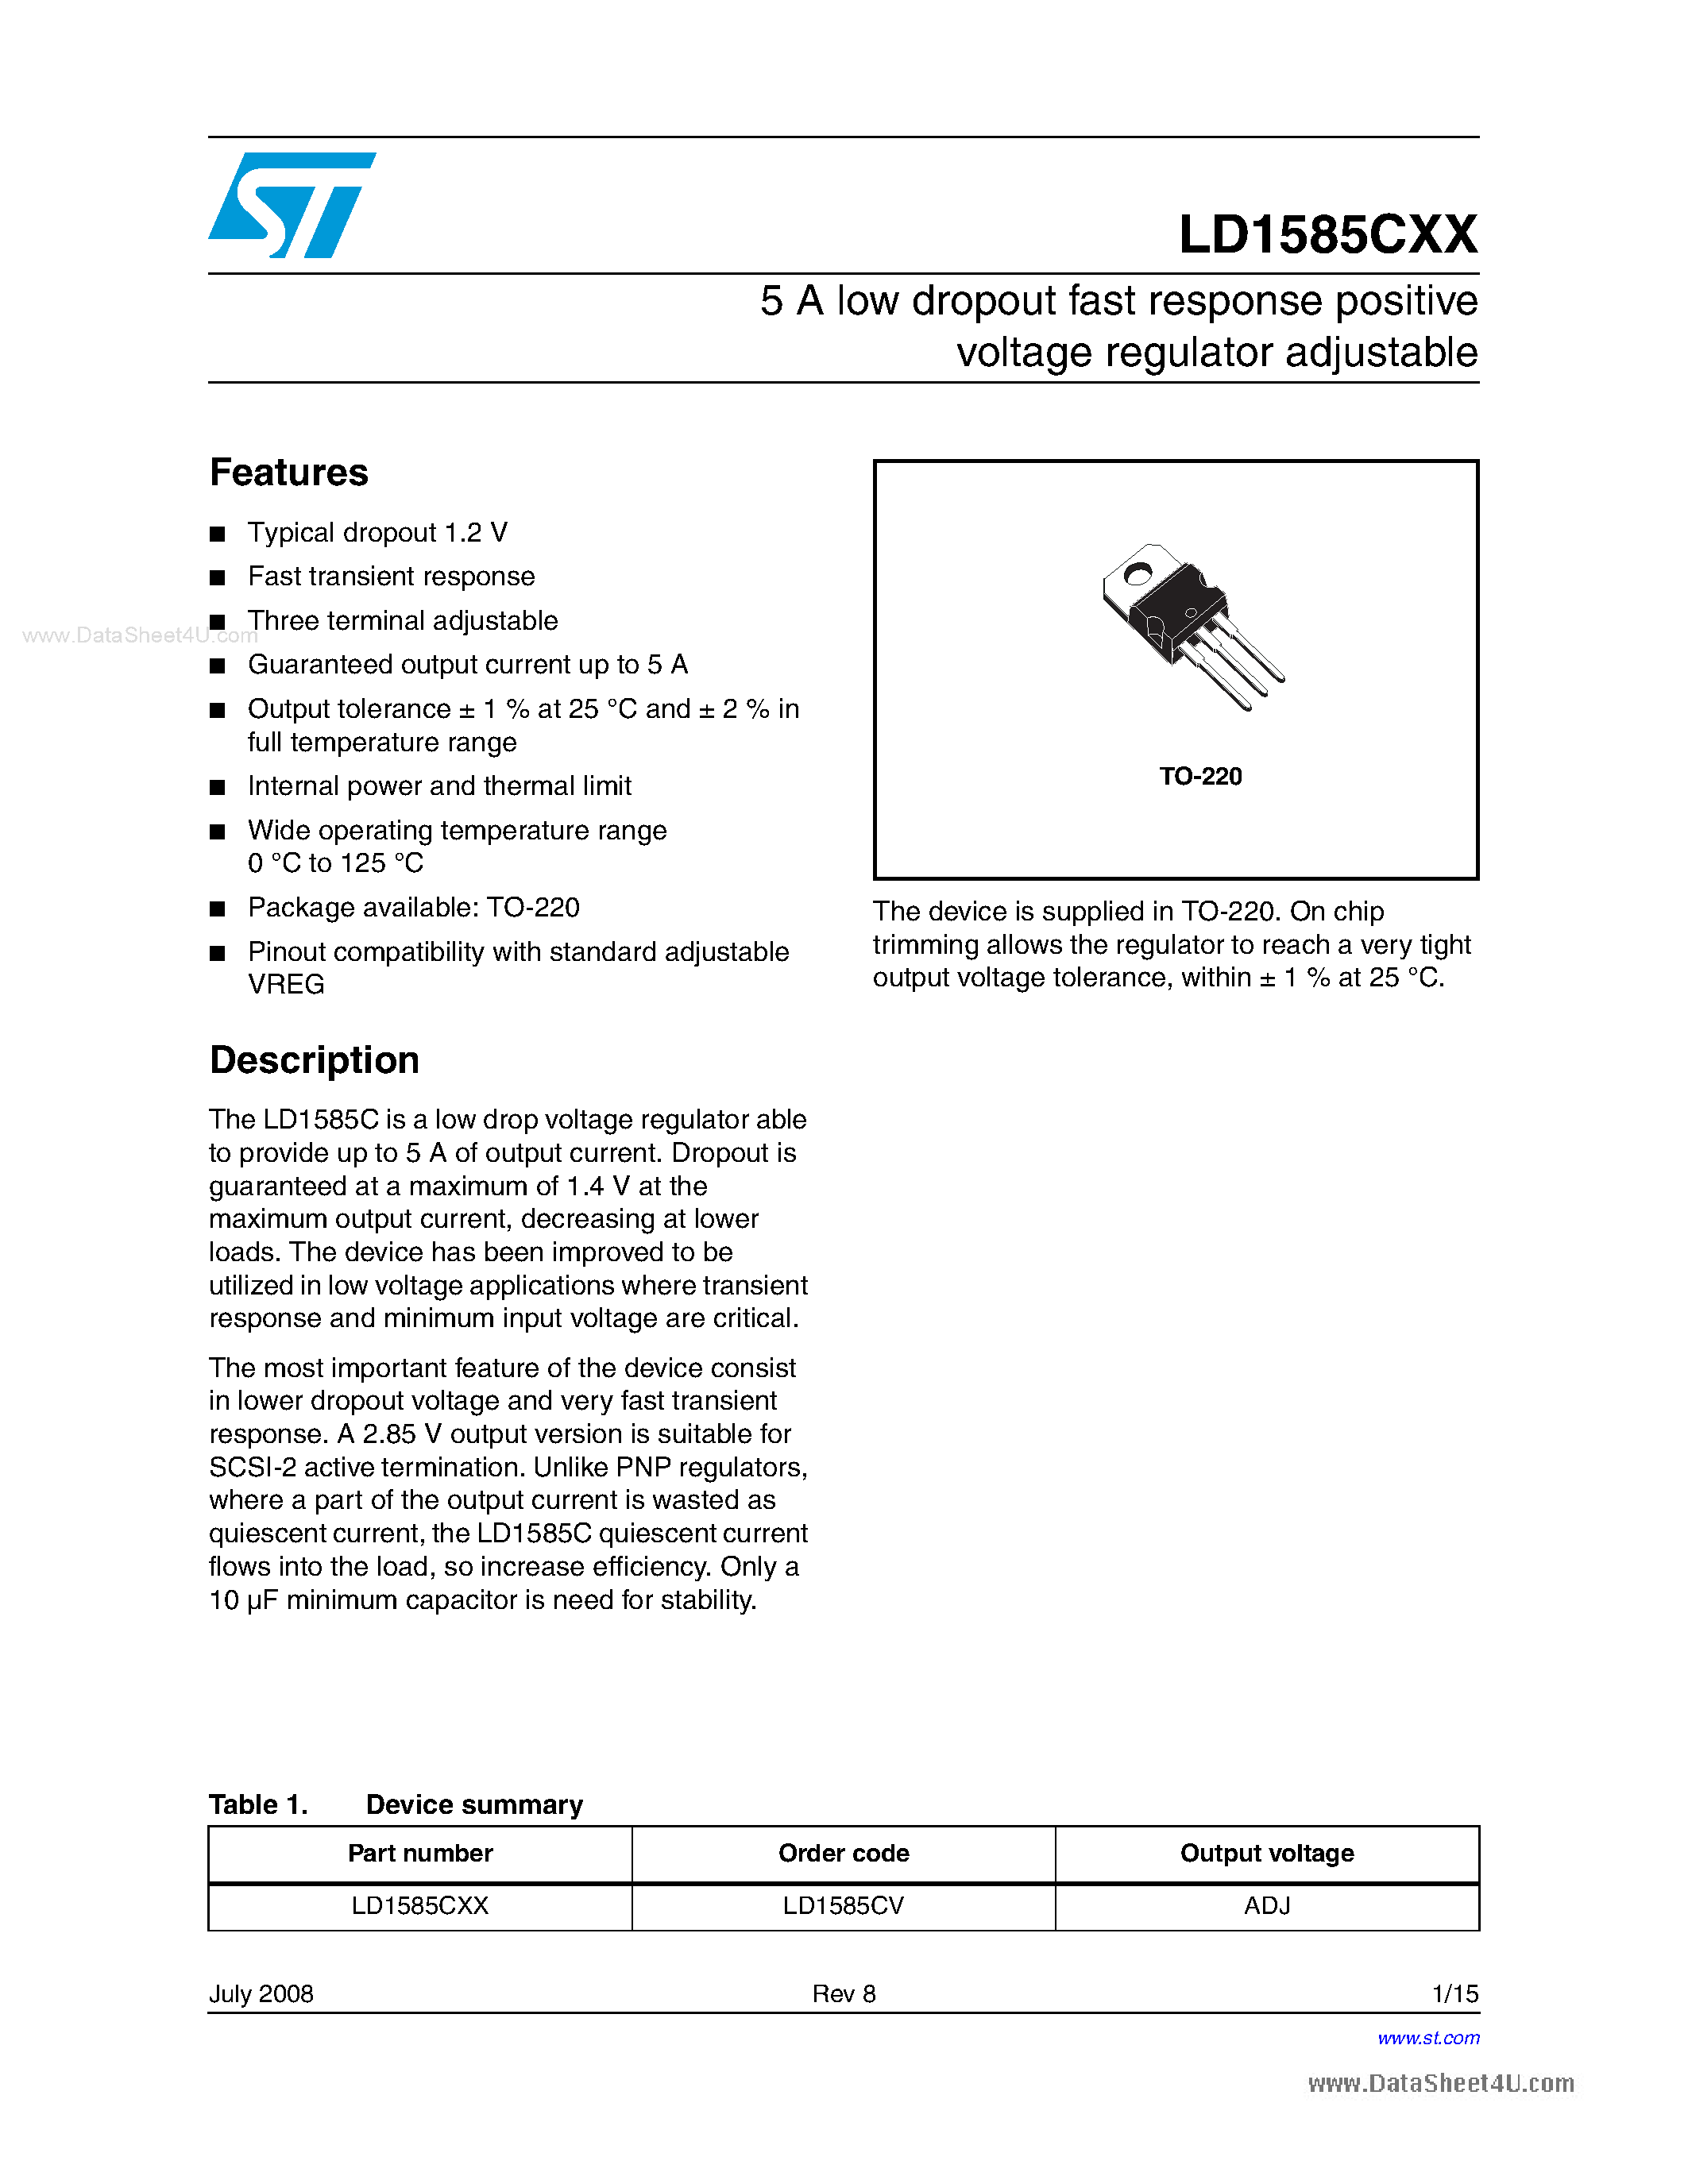 Datasheet LD1585CXX - 5A low dropout fast response positive voltage regulator adjustable page 1